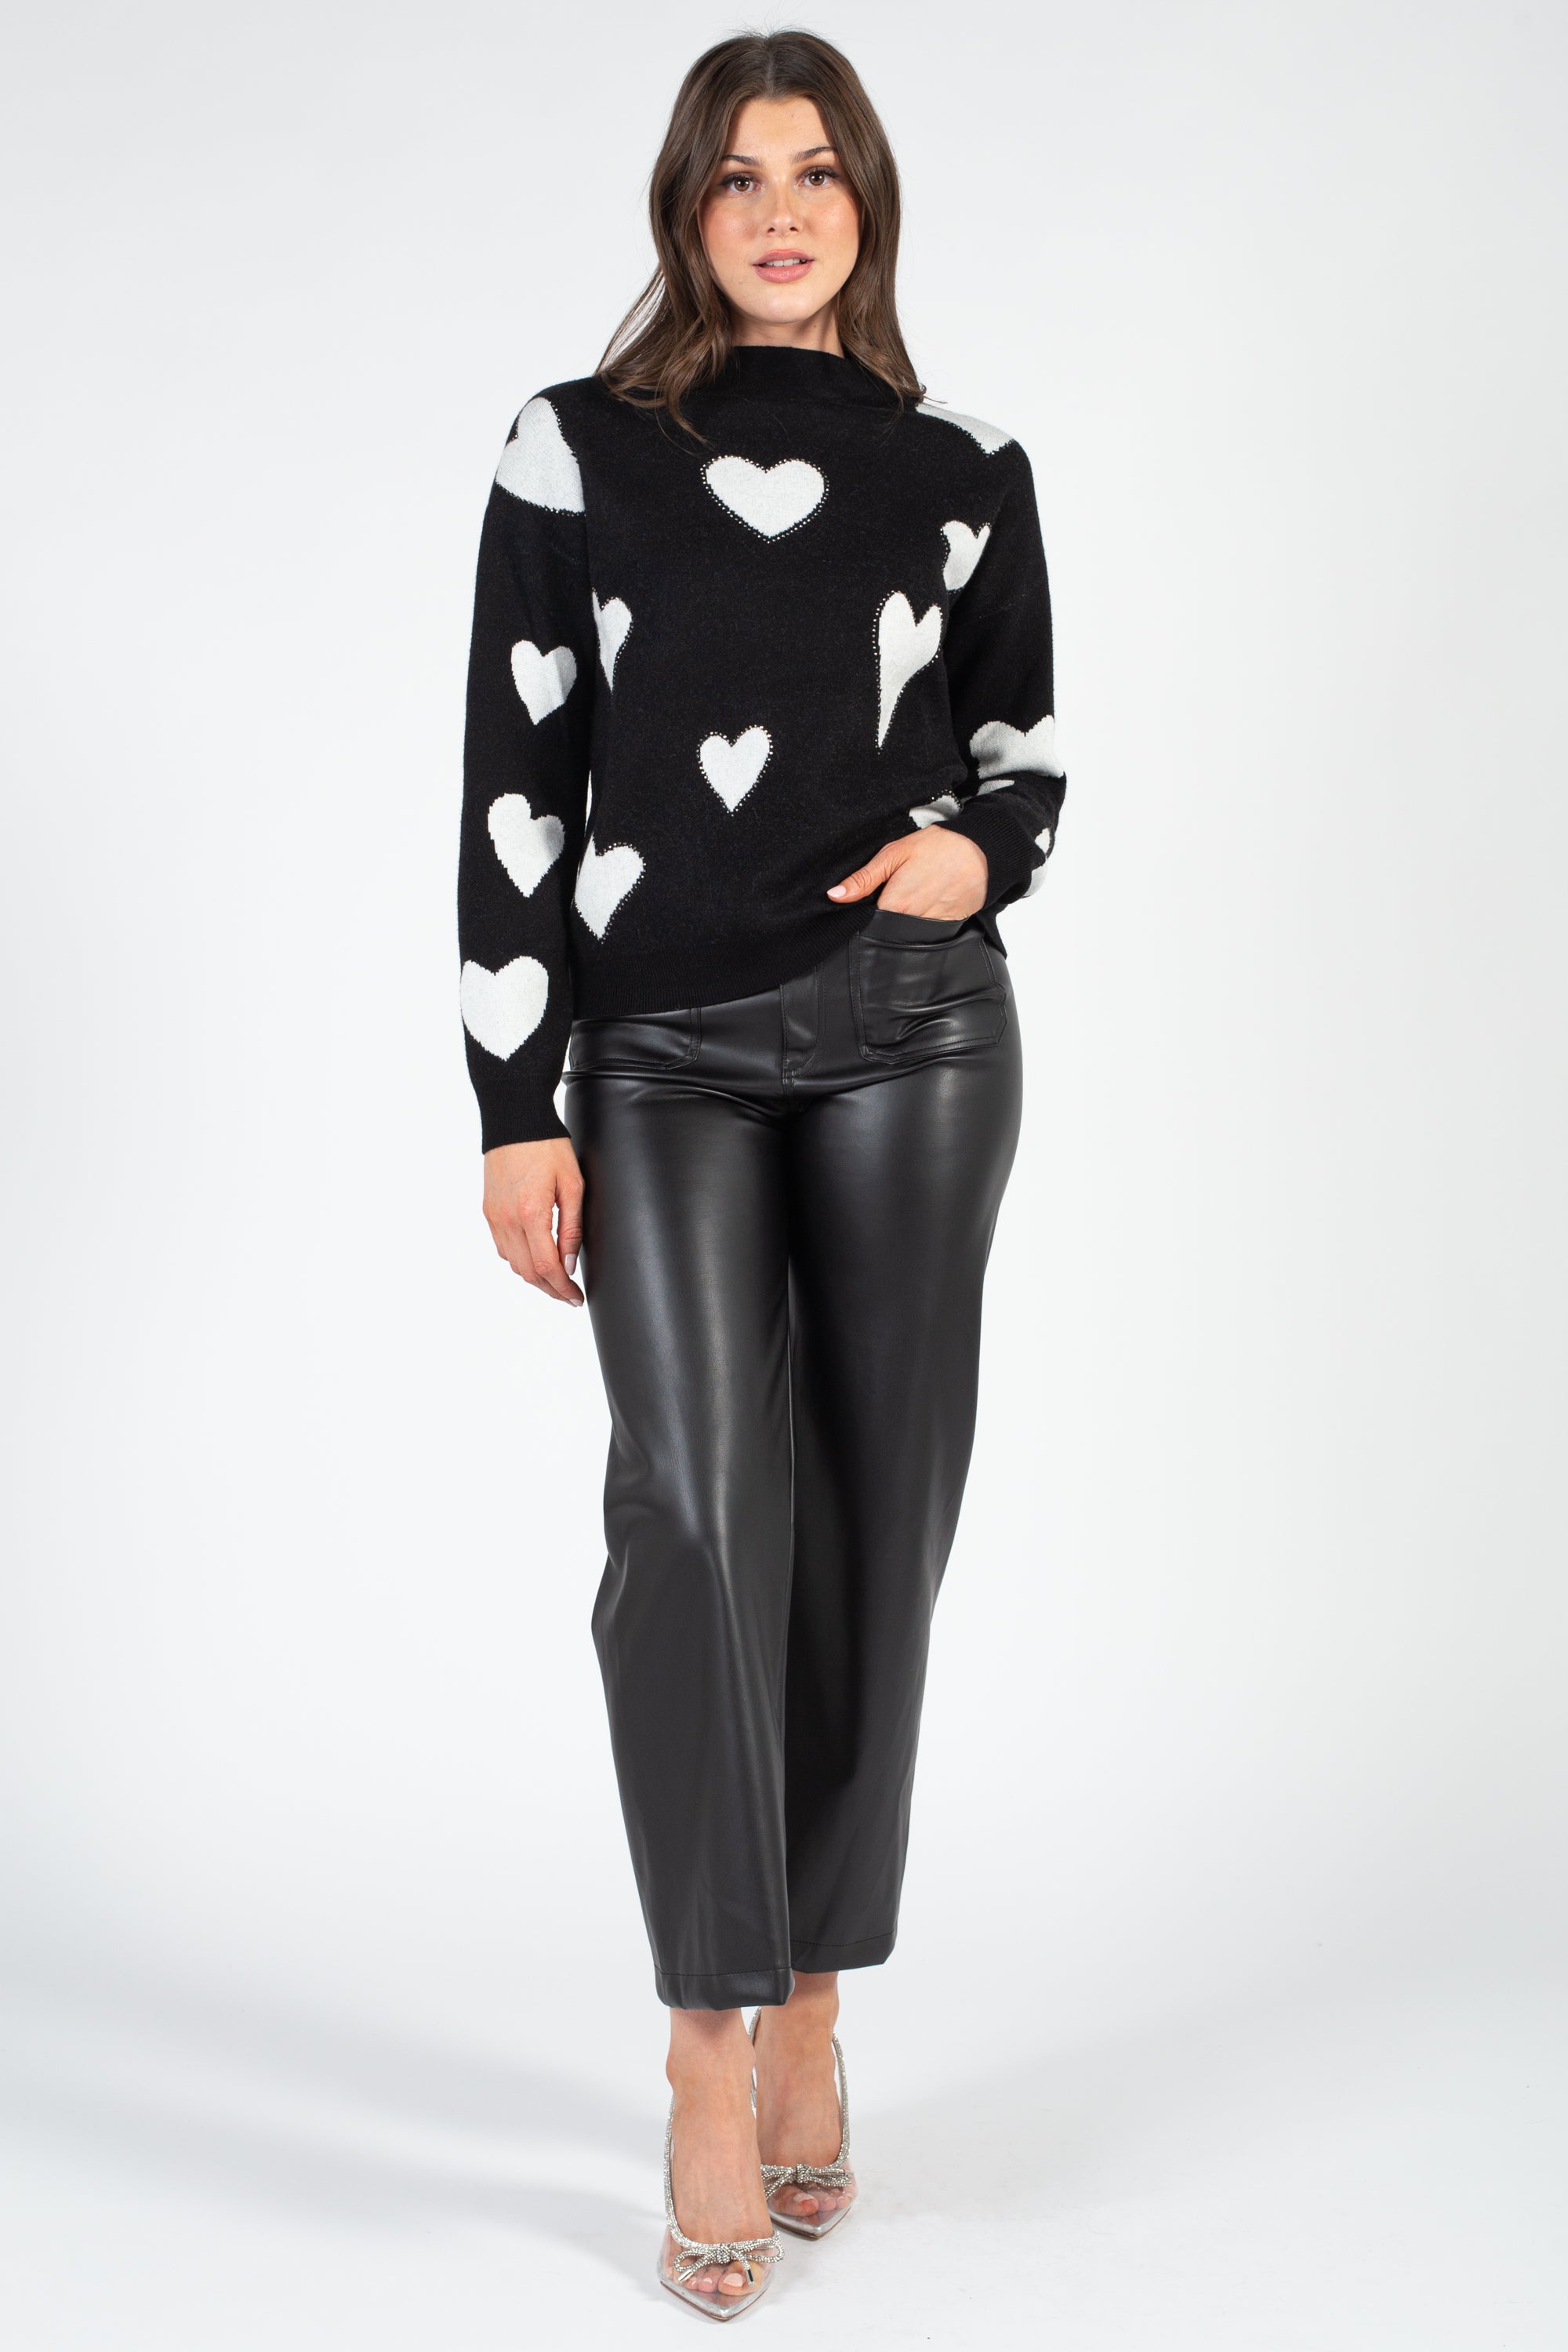 Lover Girl Rhinestone Heart Sweater